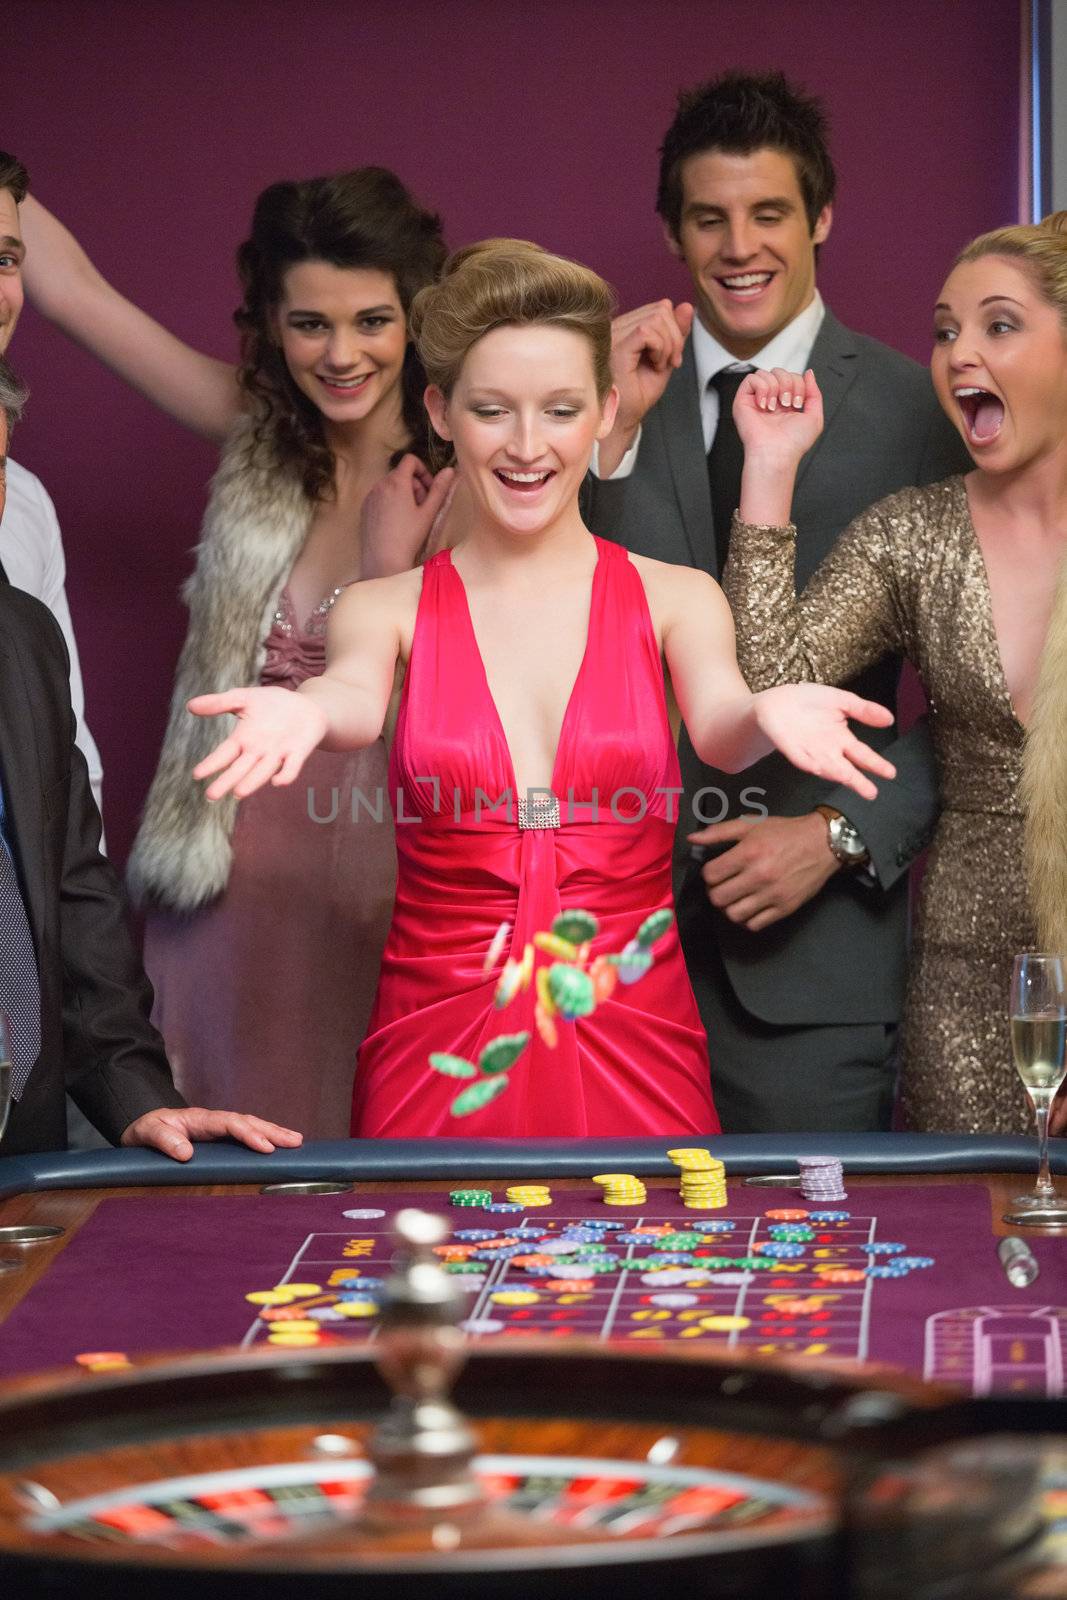 Woman winning at roulette by Wavebreakmedia